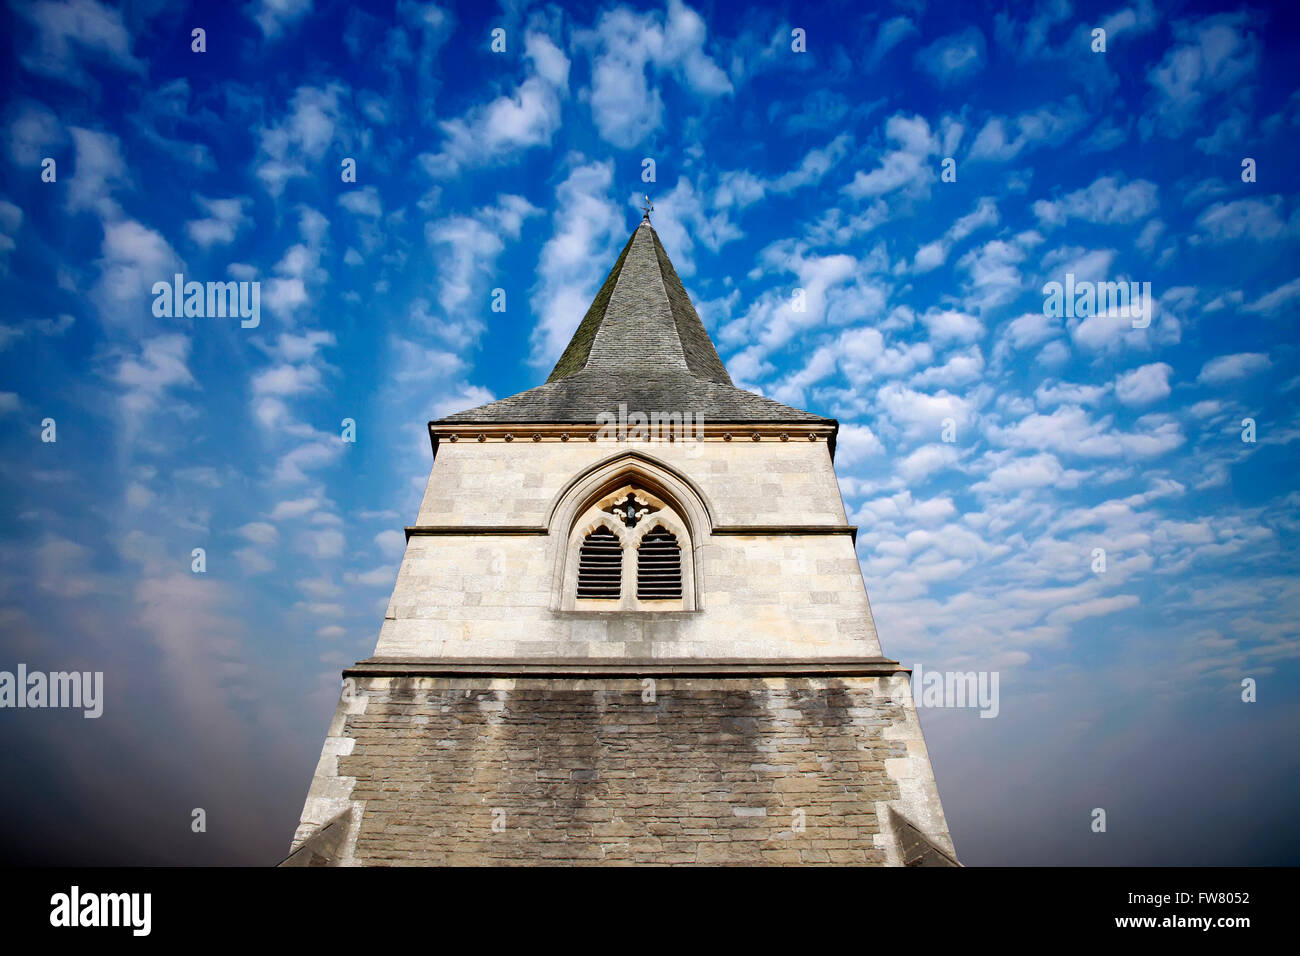 Church spire against a dramatic blue sky Stock Photo